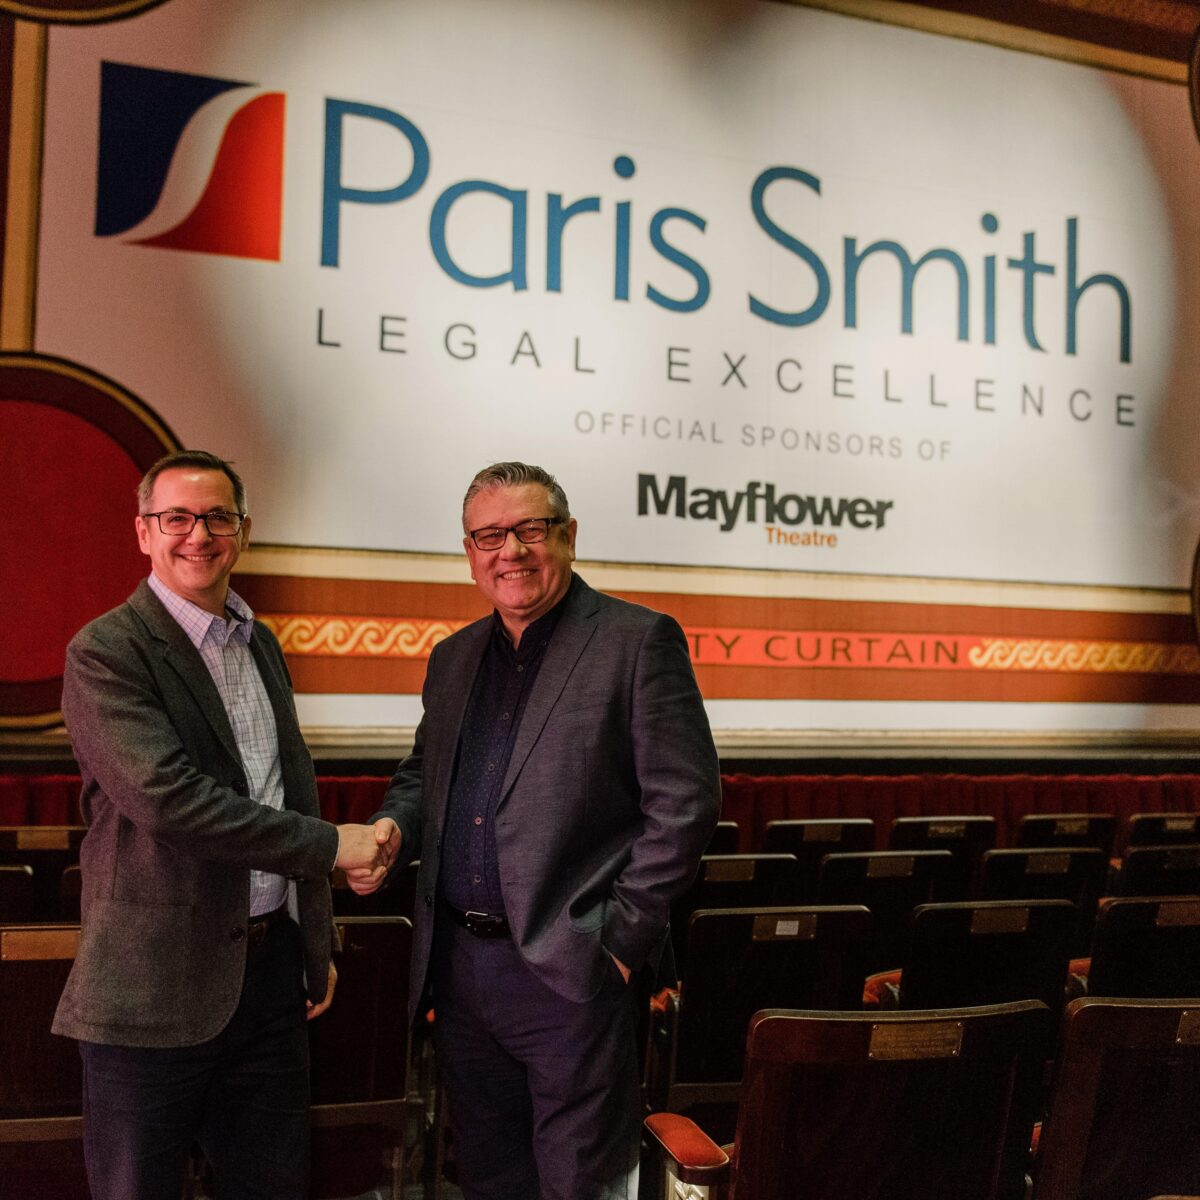 Paris Smith to extend sponsorship of Mayflower Theatre